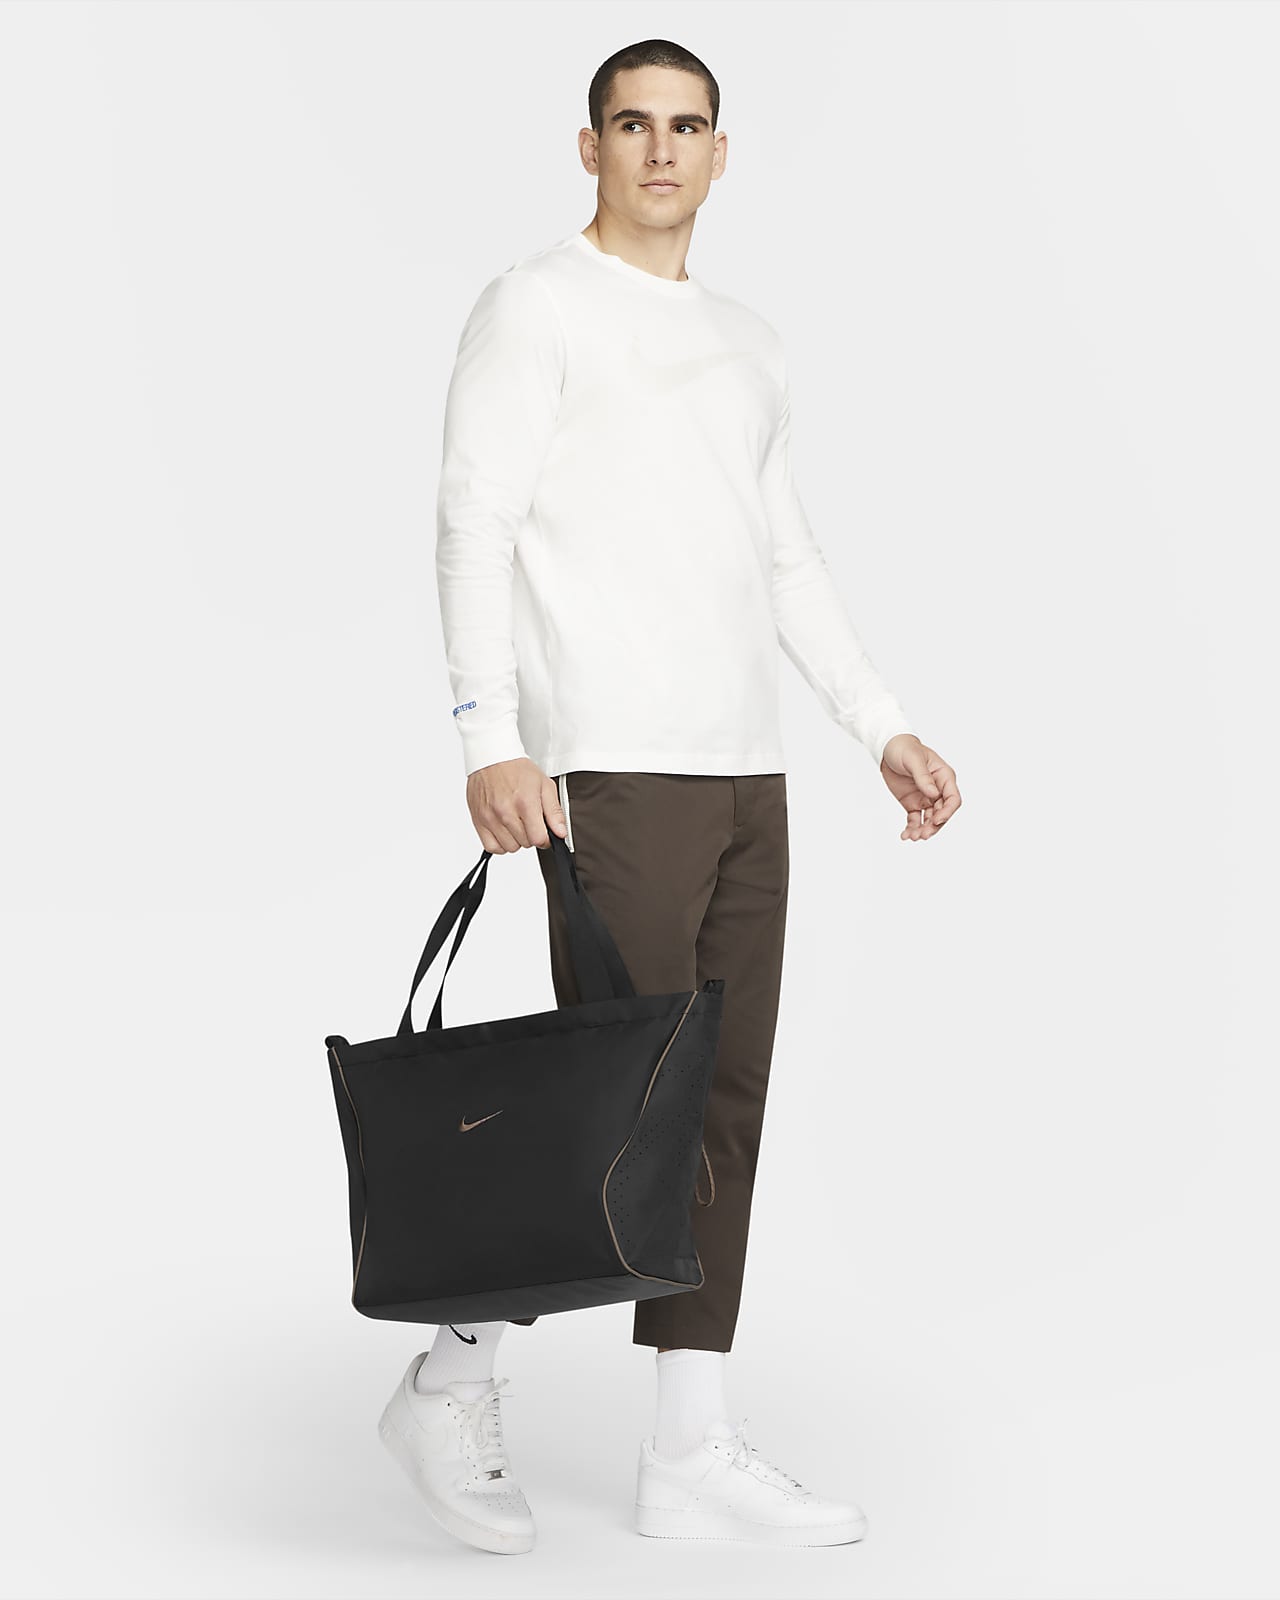 Bags Nike Essentials Tote • shop